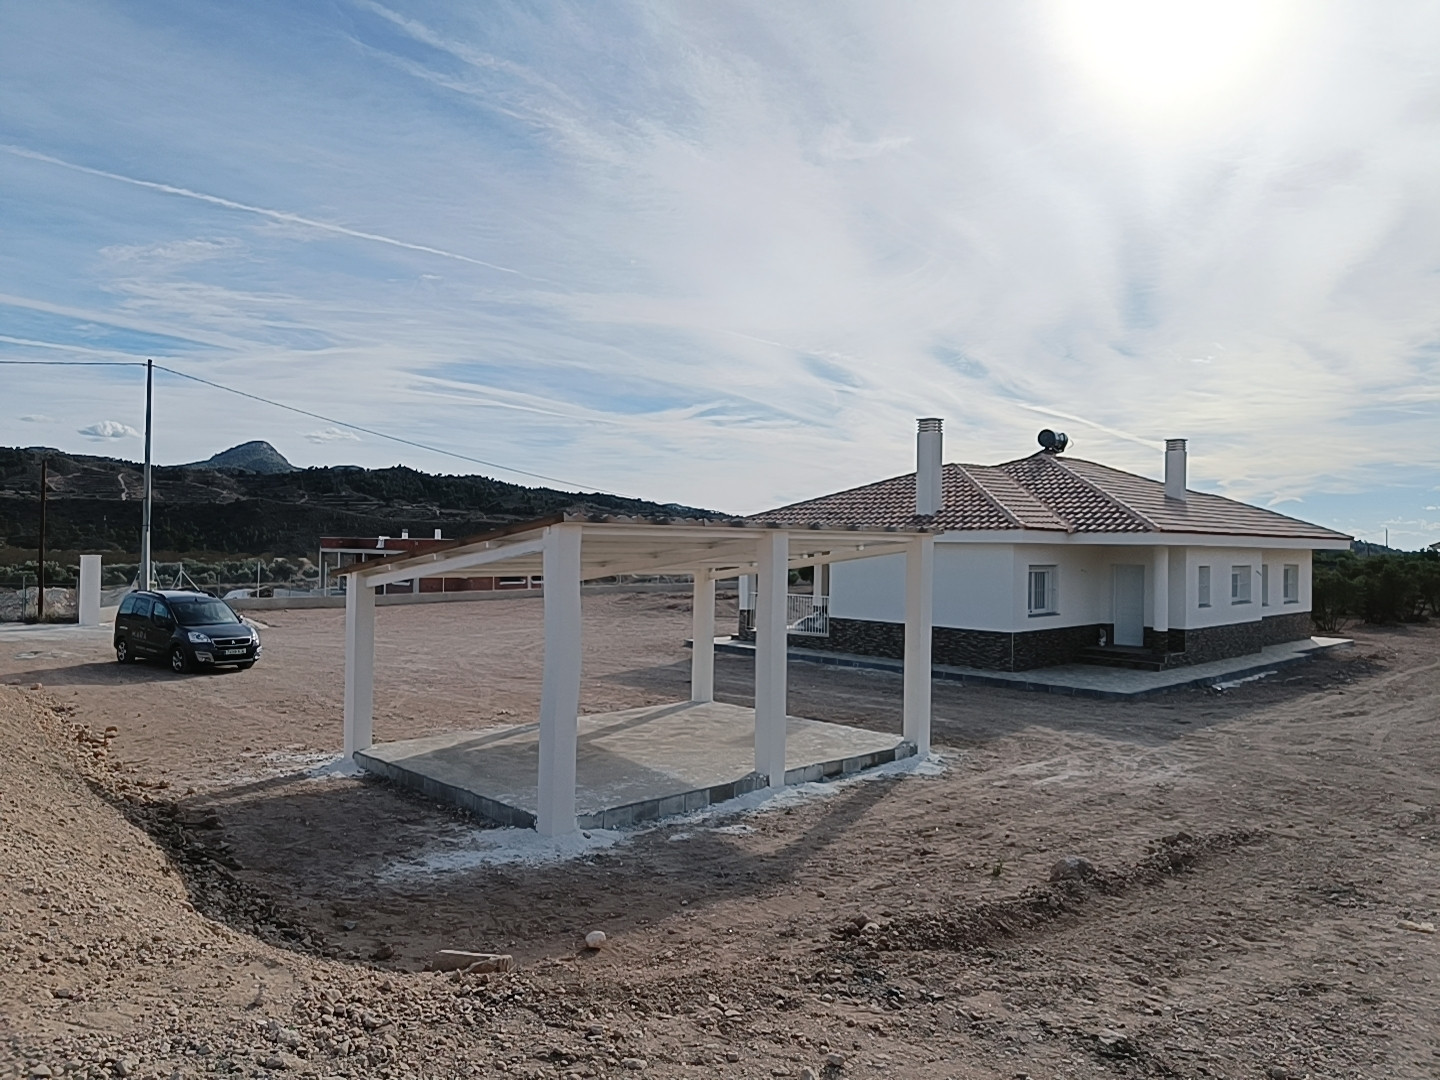 Villa in Macisvenda - New build in Spanish Fincas